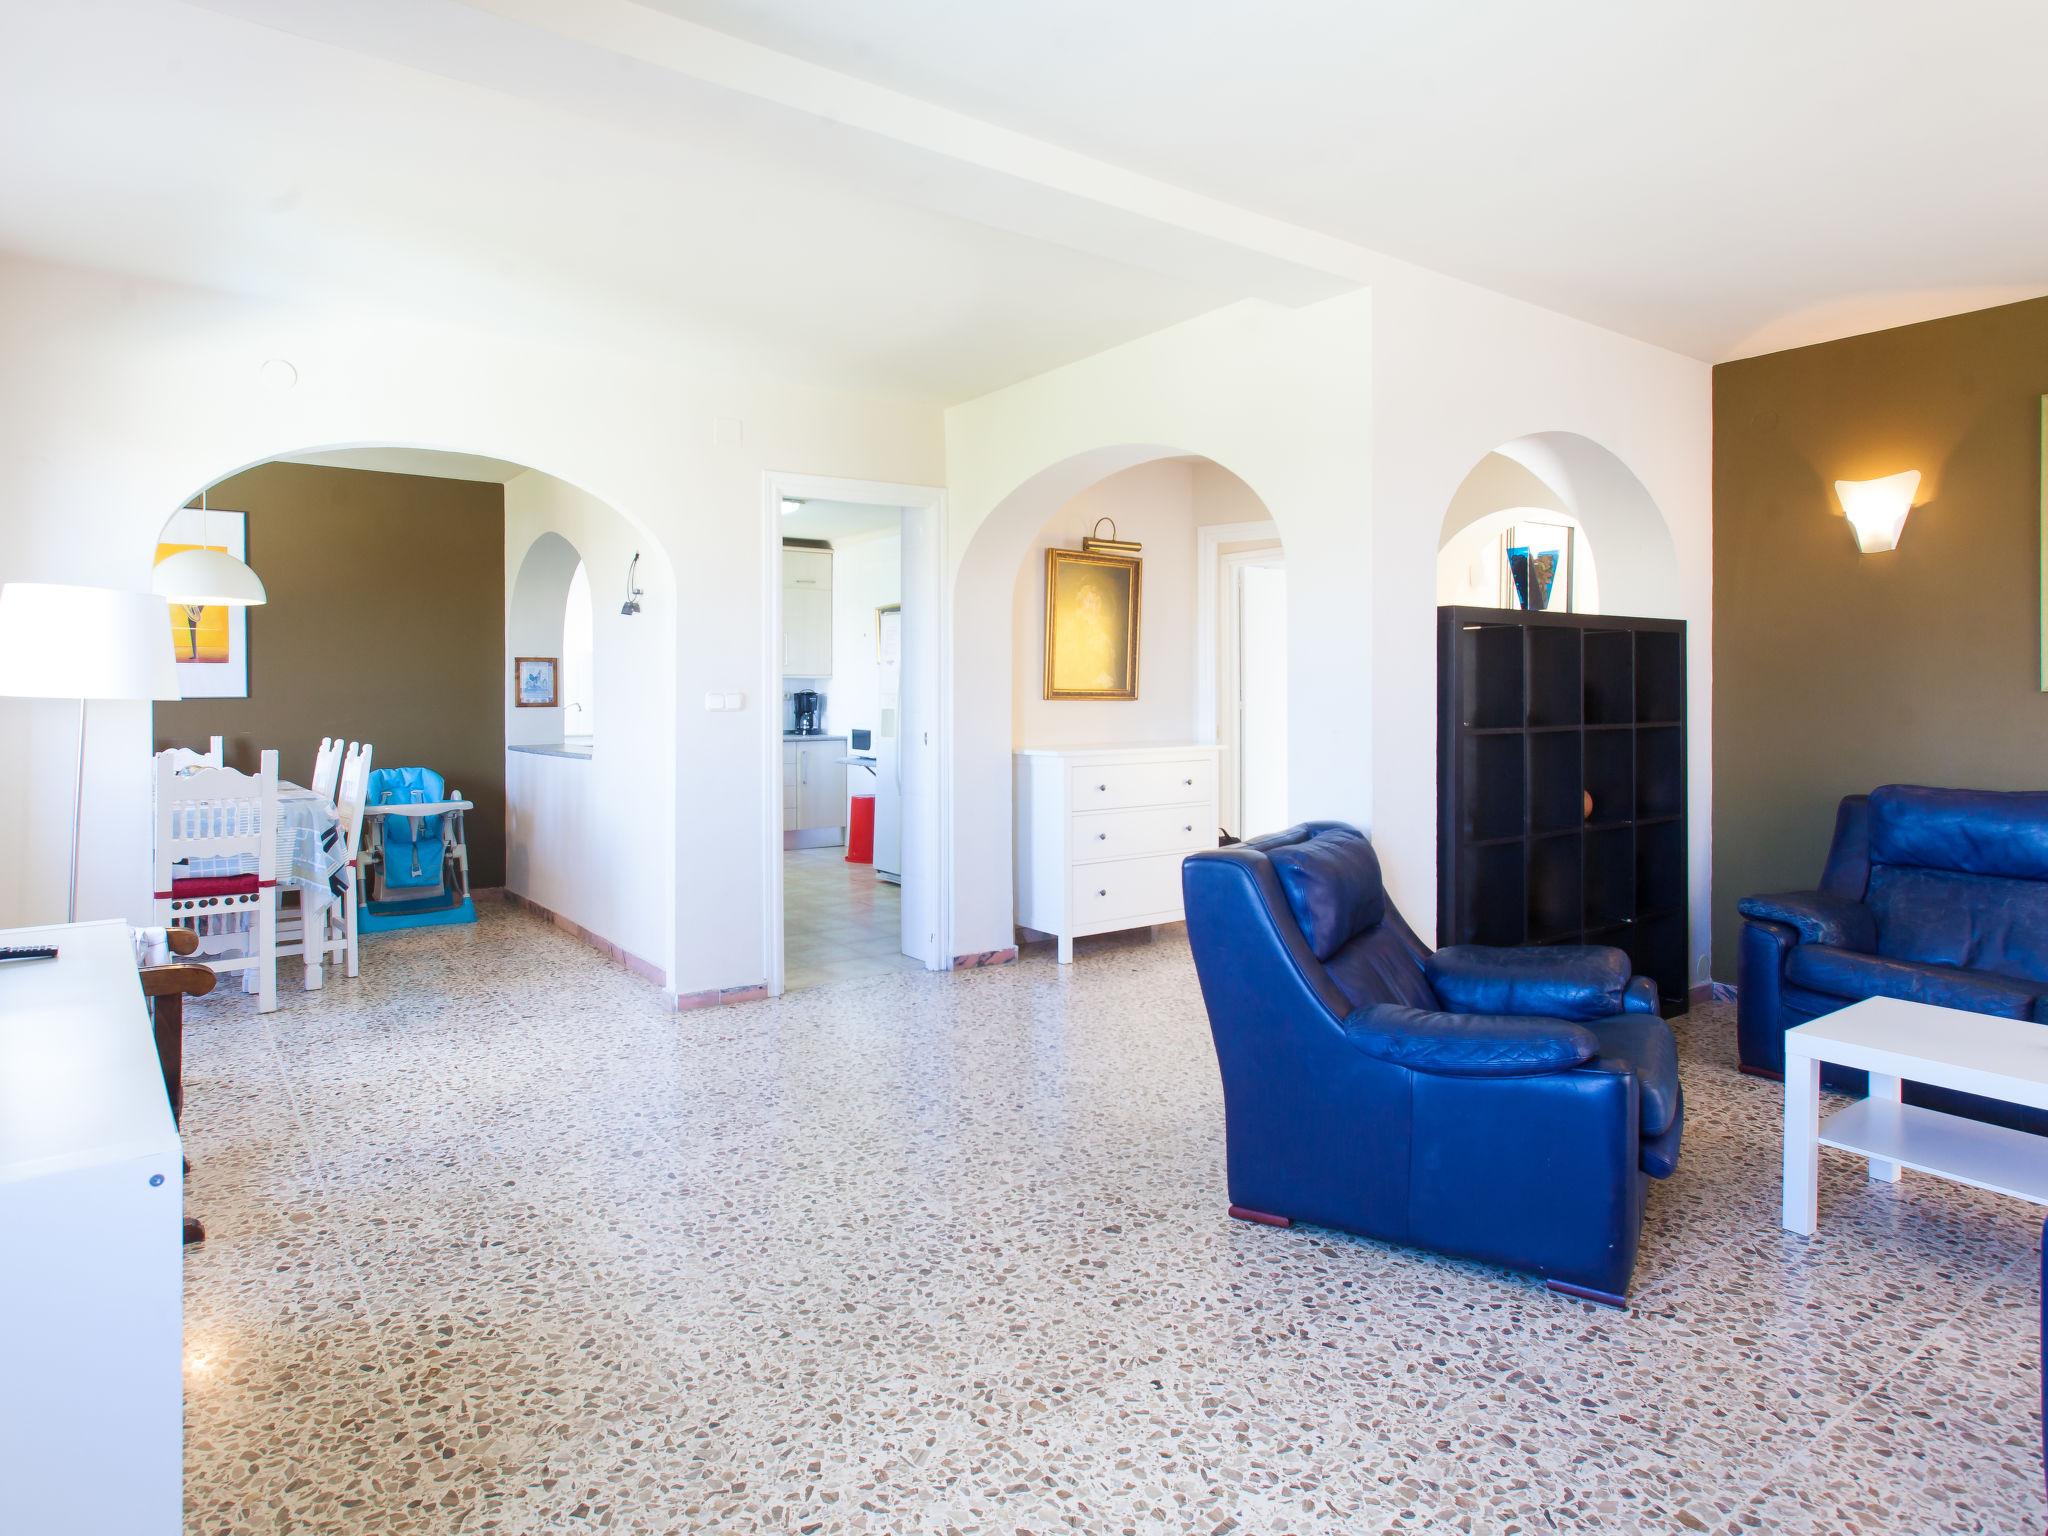 Foto 4 - Casa con 4 camere da letto a Vélez-Málaga con piscina privata e vista mare